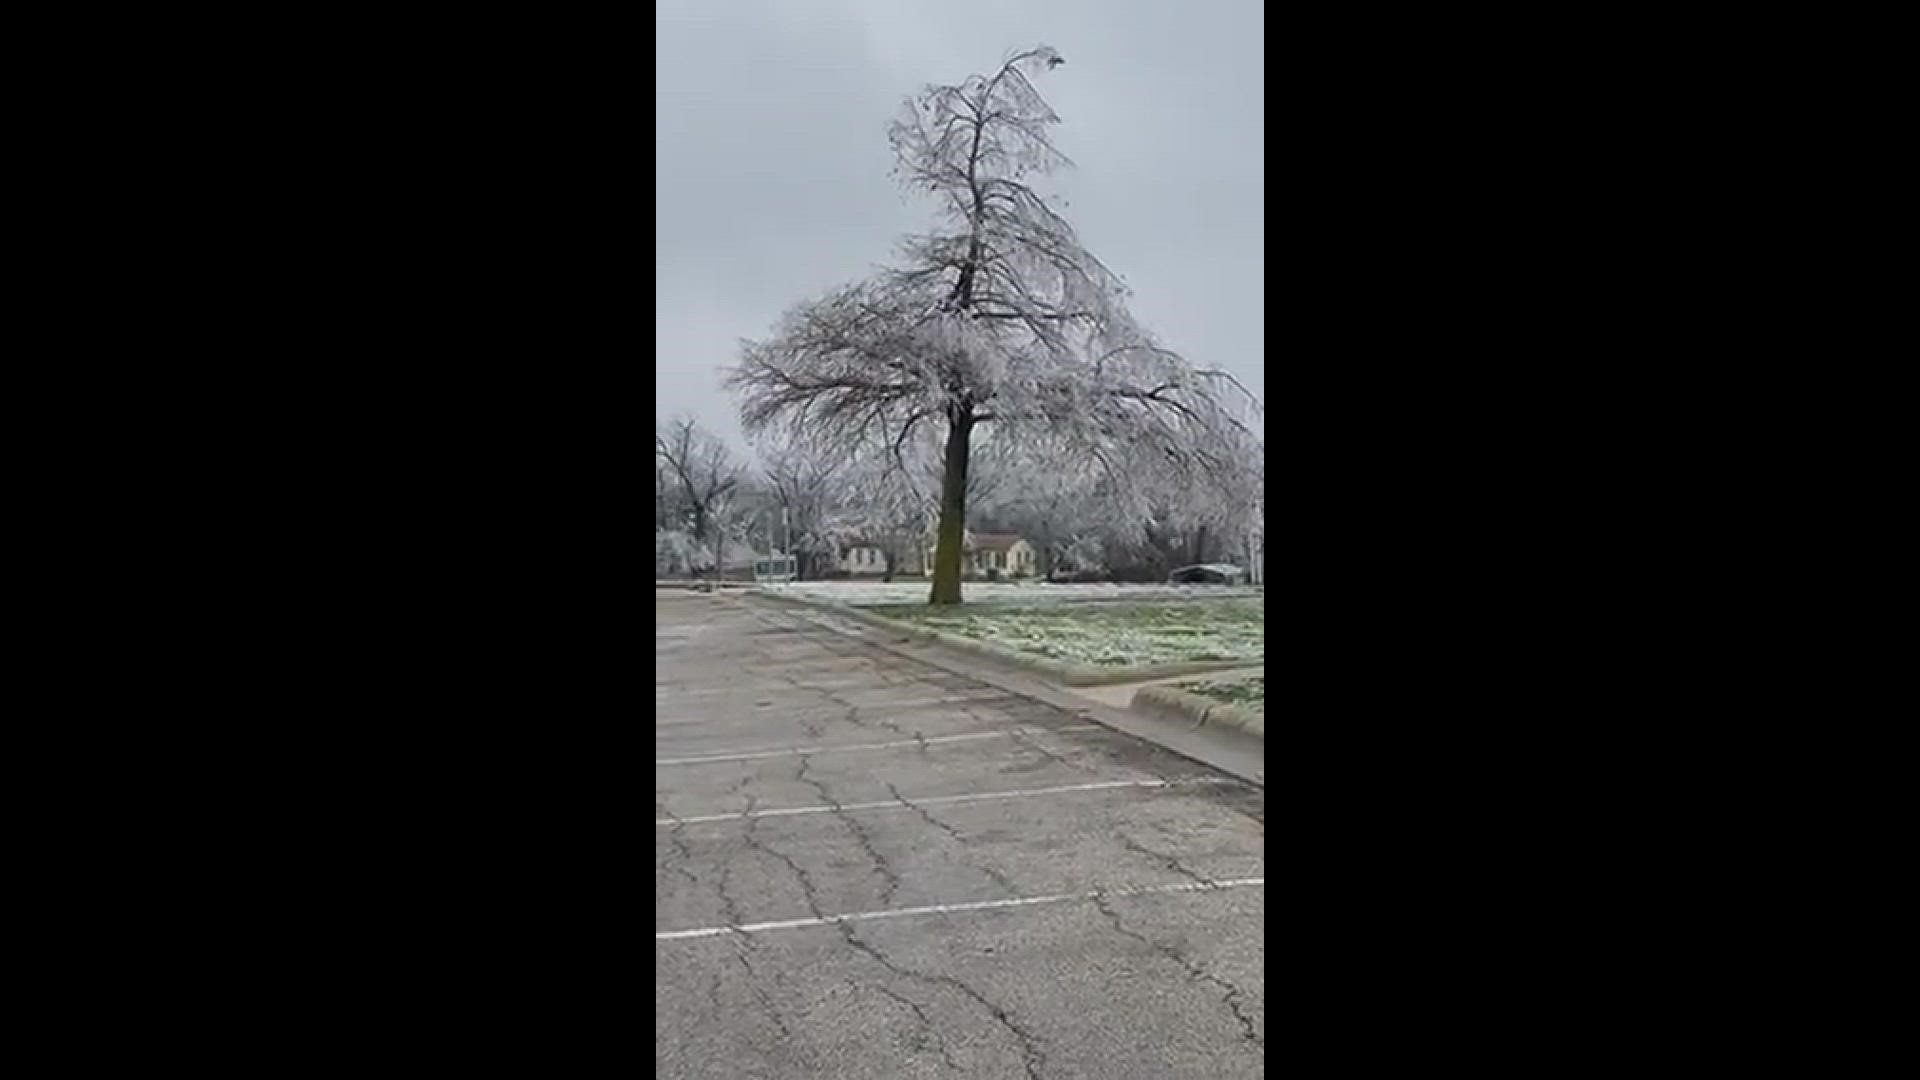 Large chunks of ice falling off of tree.
Credit: Jennifer Edds